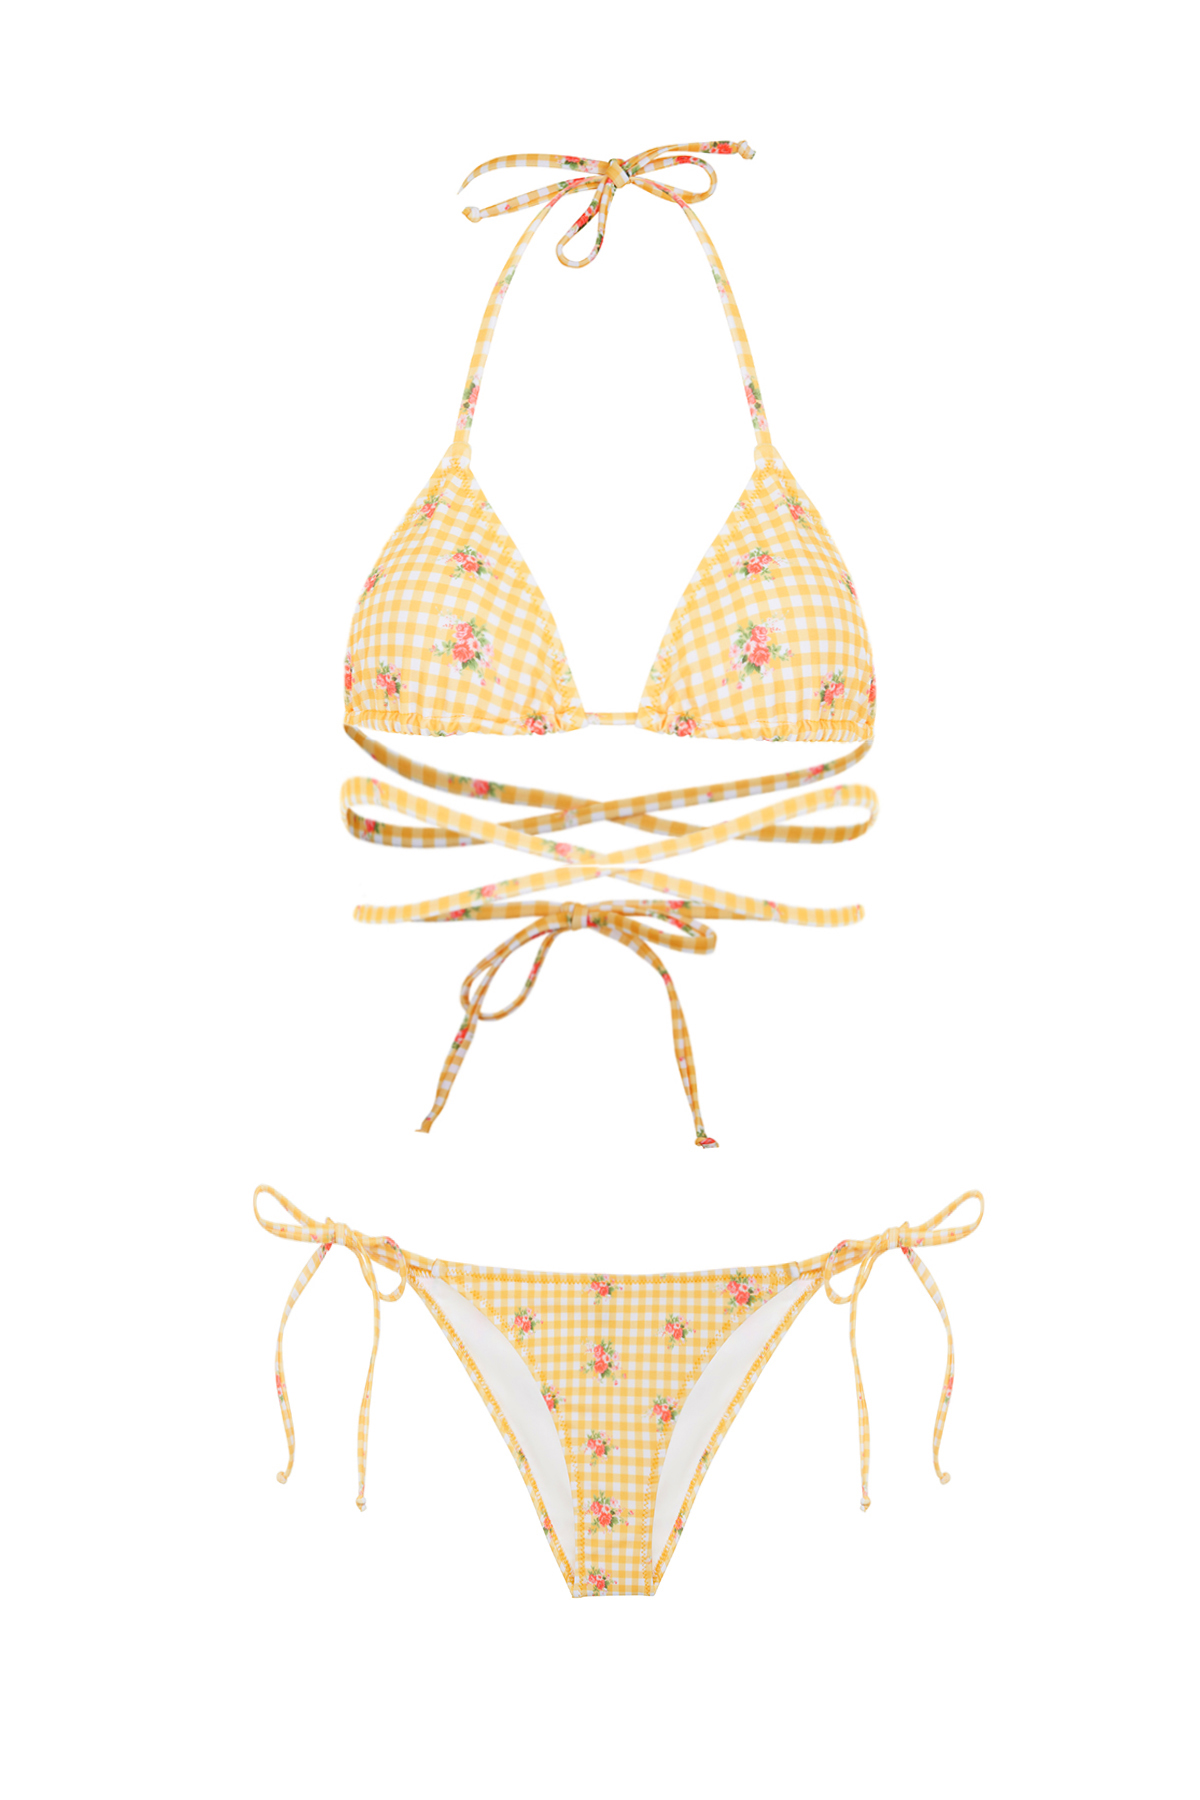 GIANNA Square Floral Pattern Triangle Bikini Set